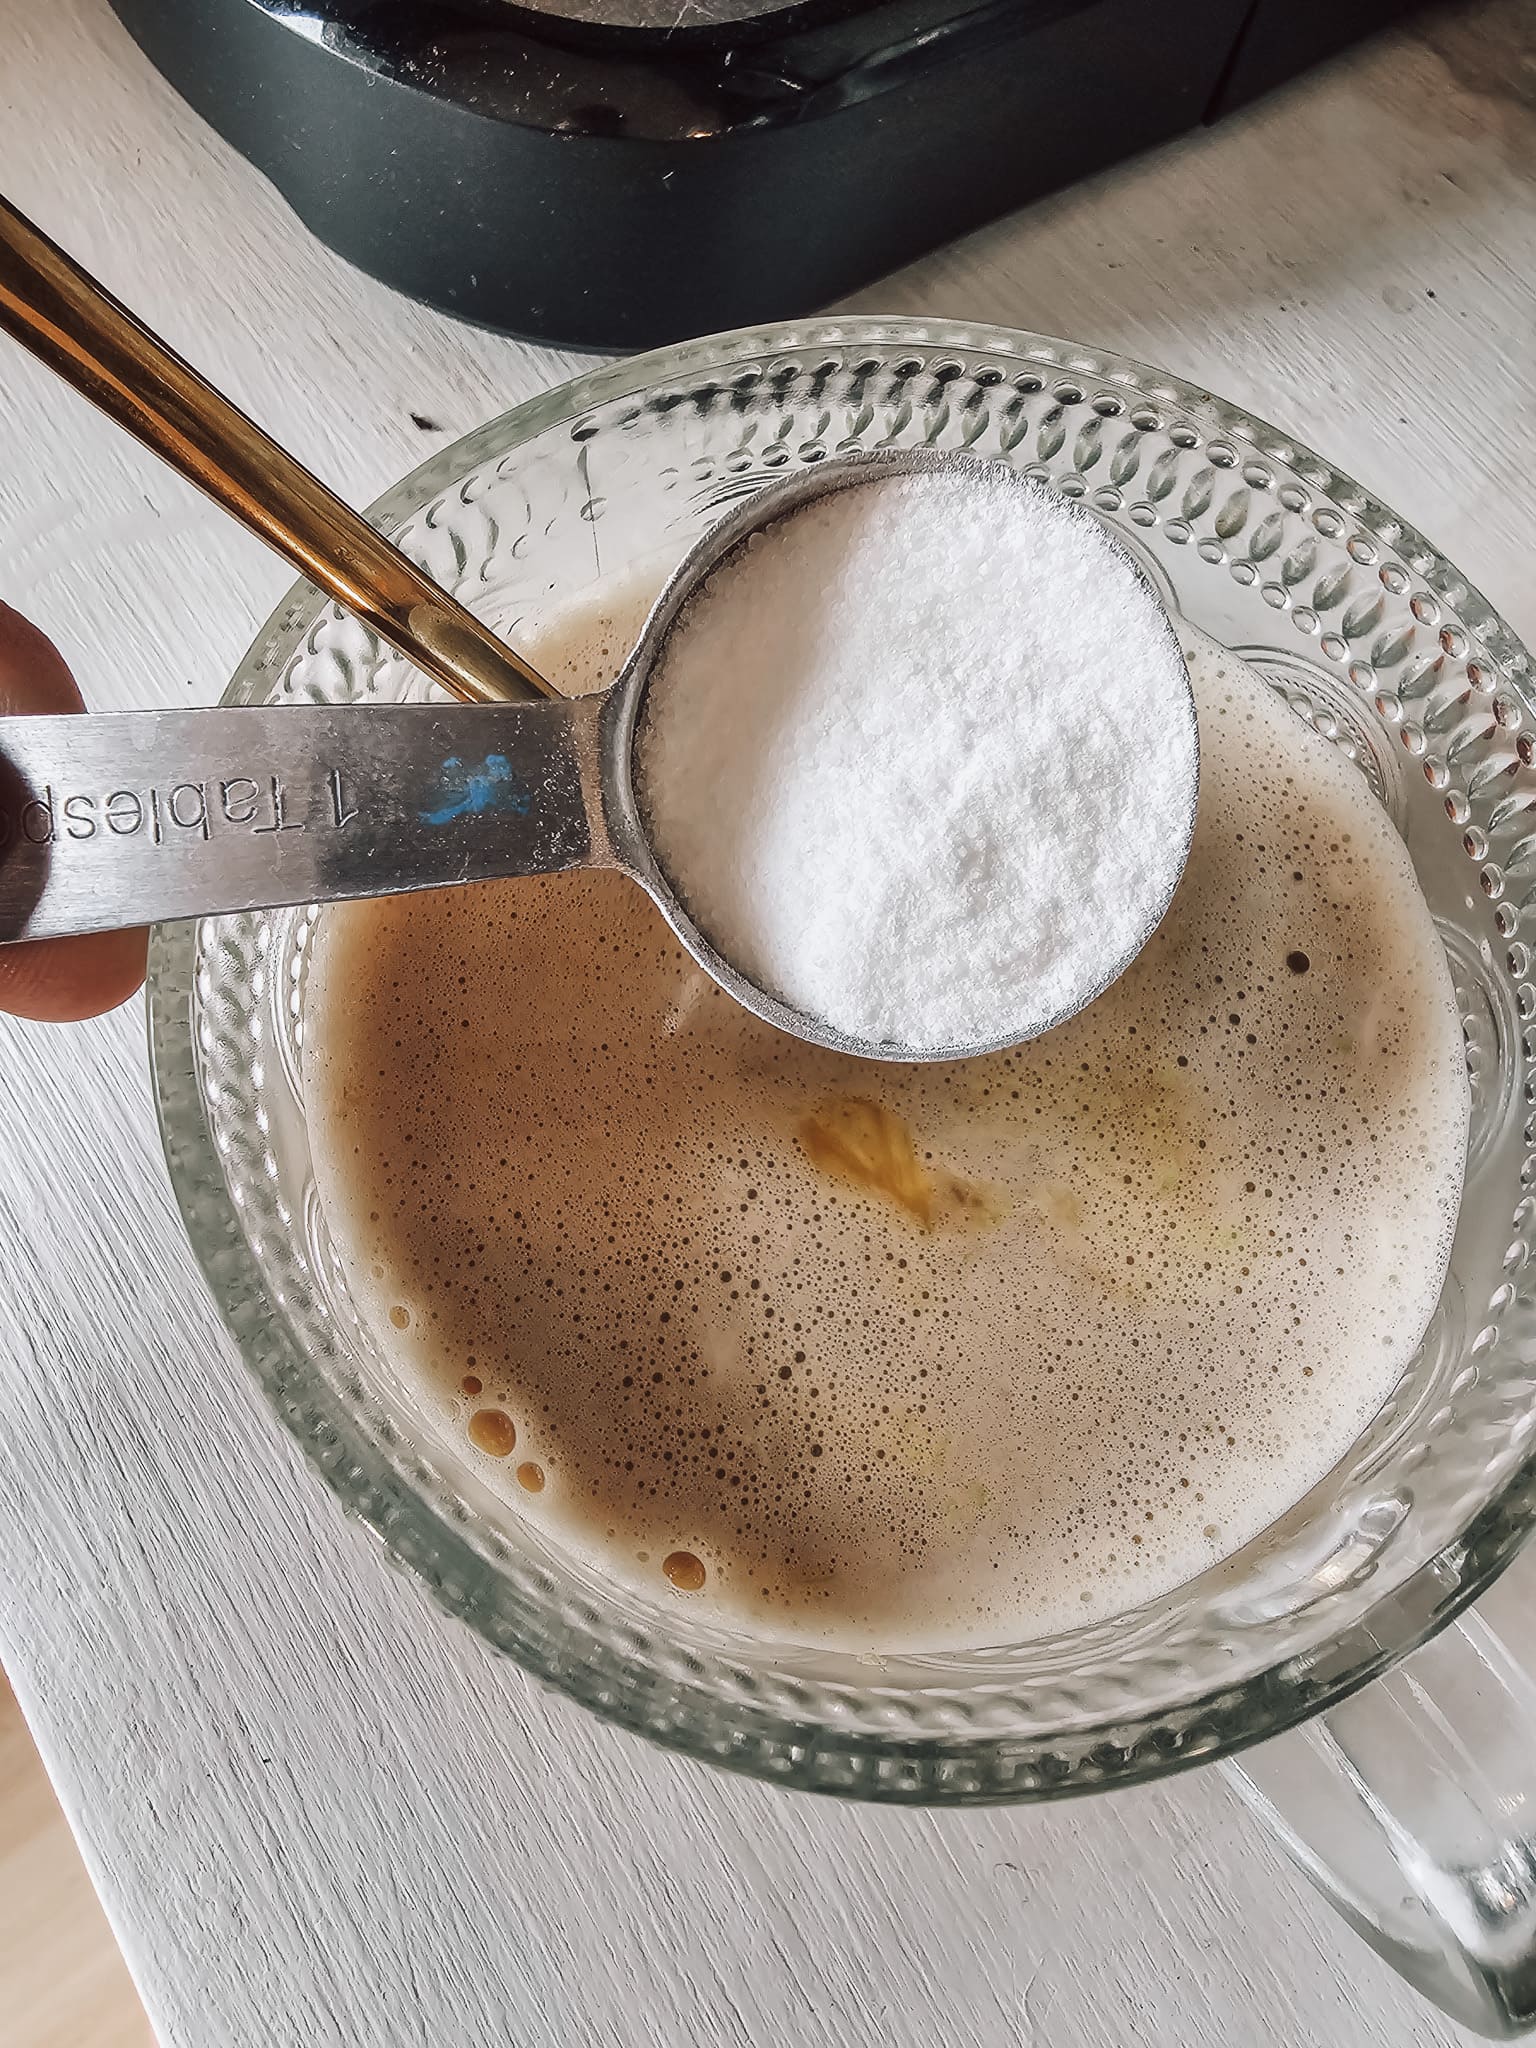 Adding remaining ingredients into mug 